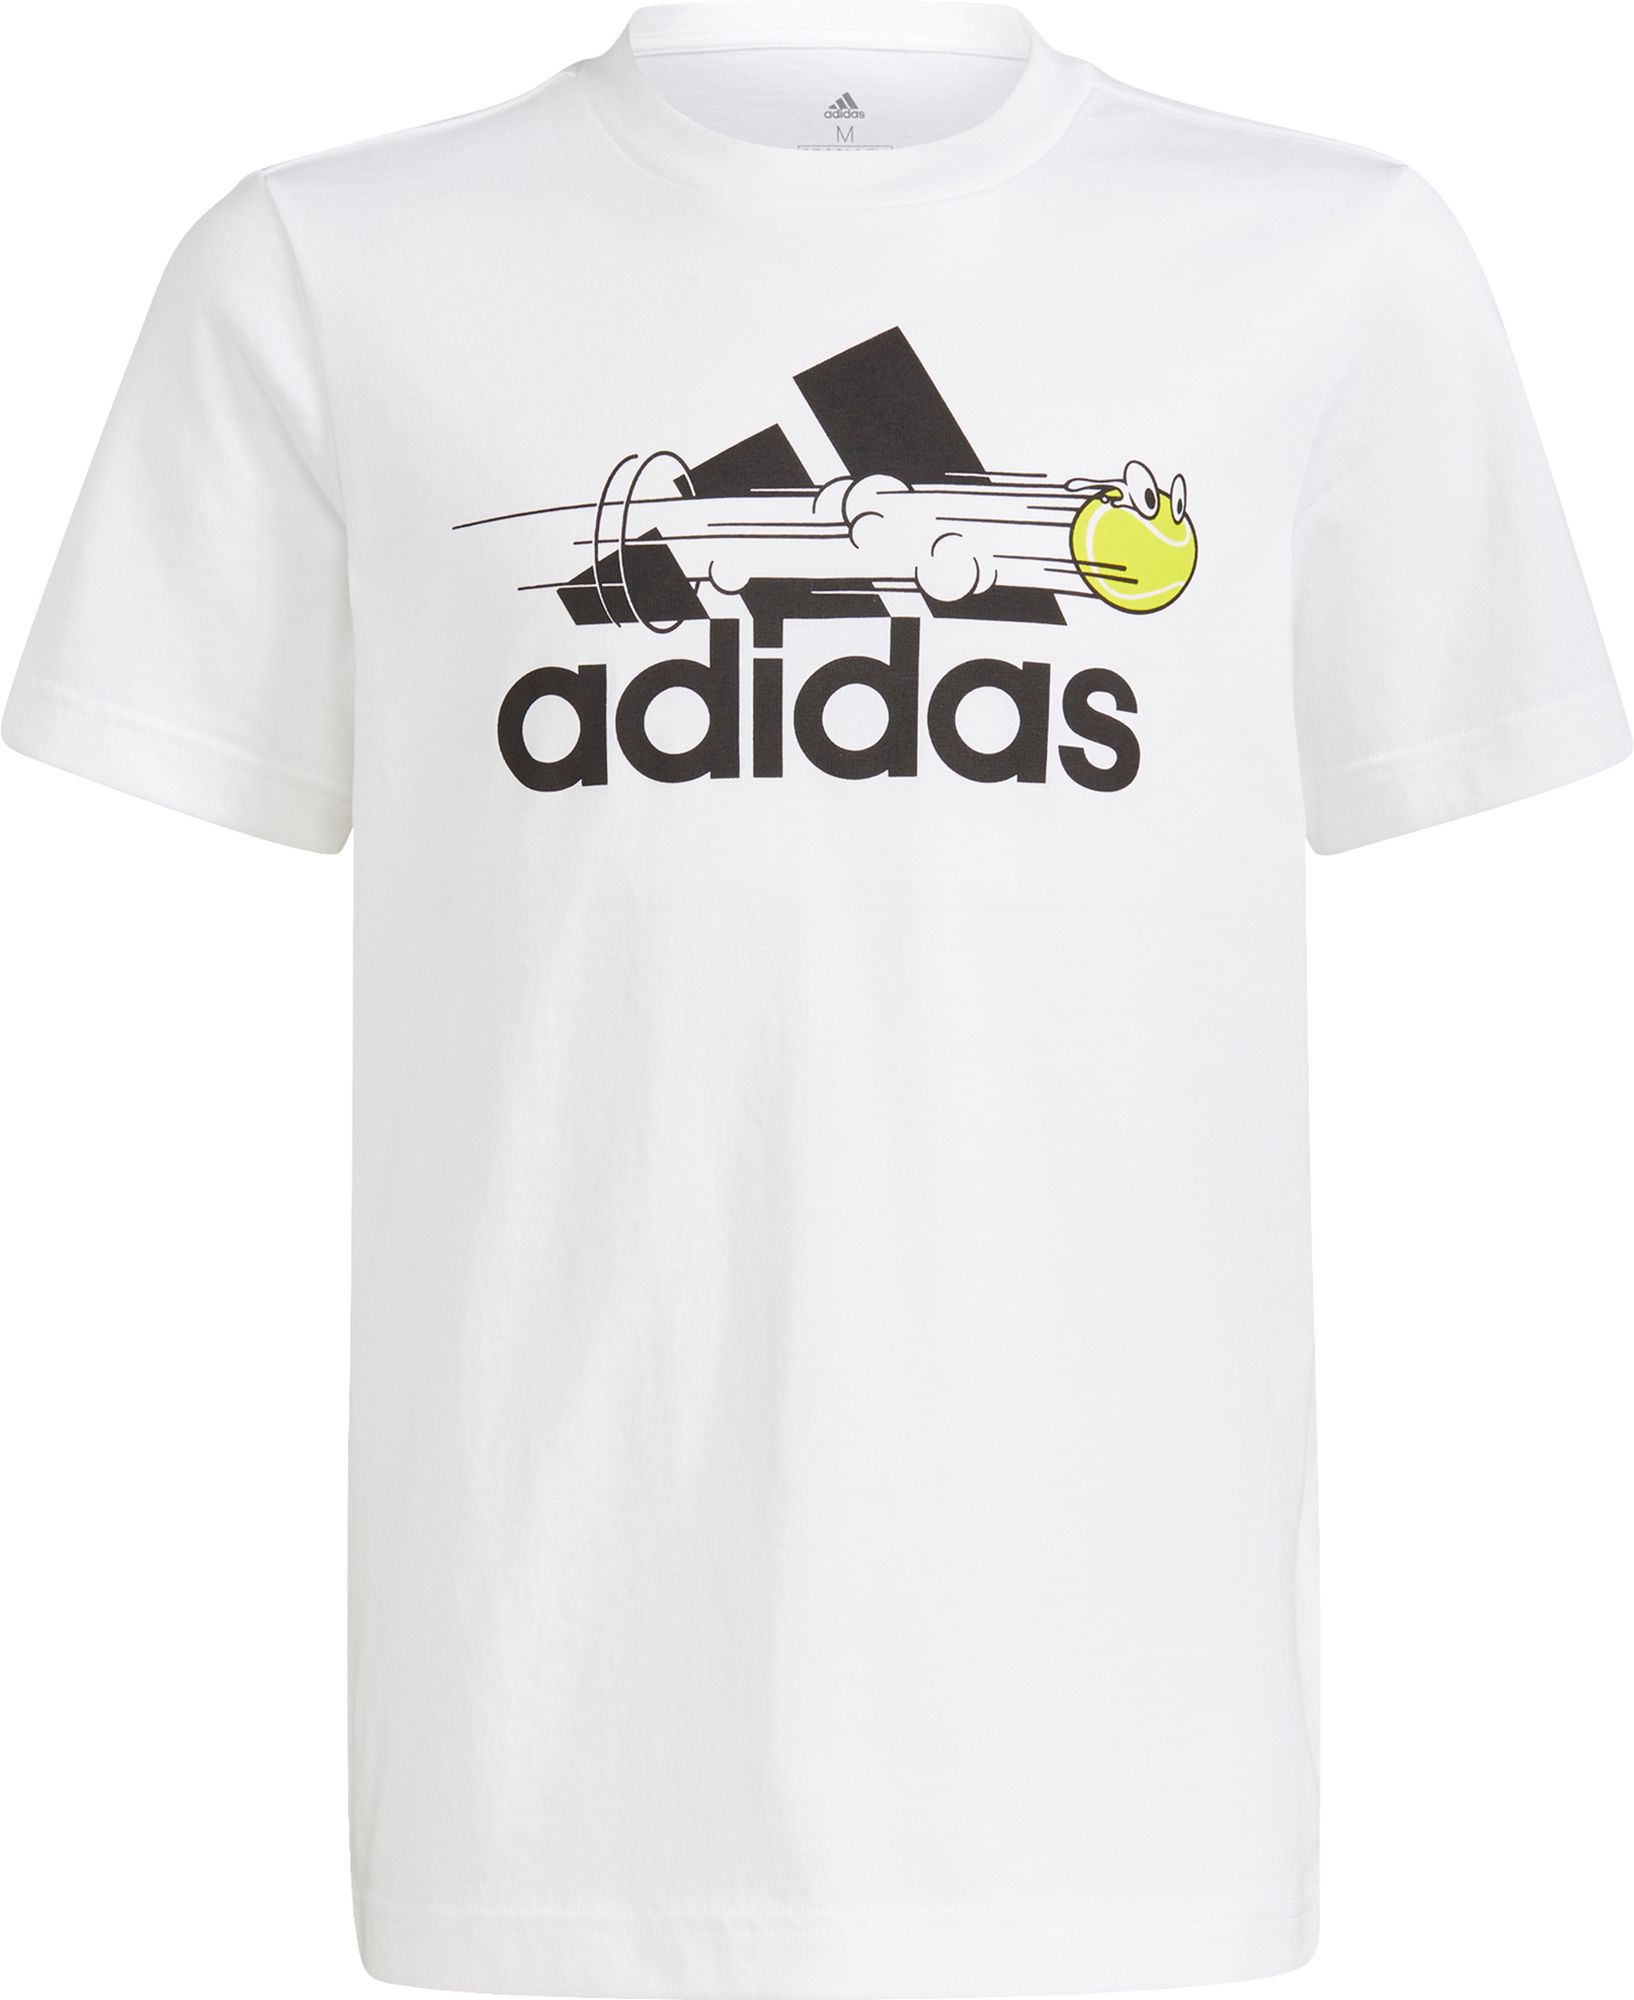 Adidas / Boys Graphic Logo T-Shirt